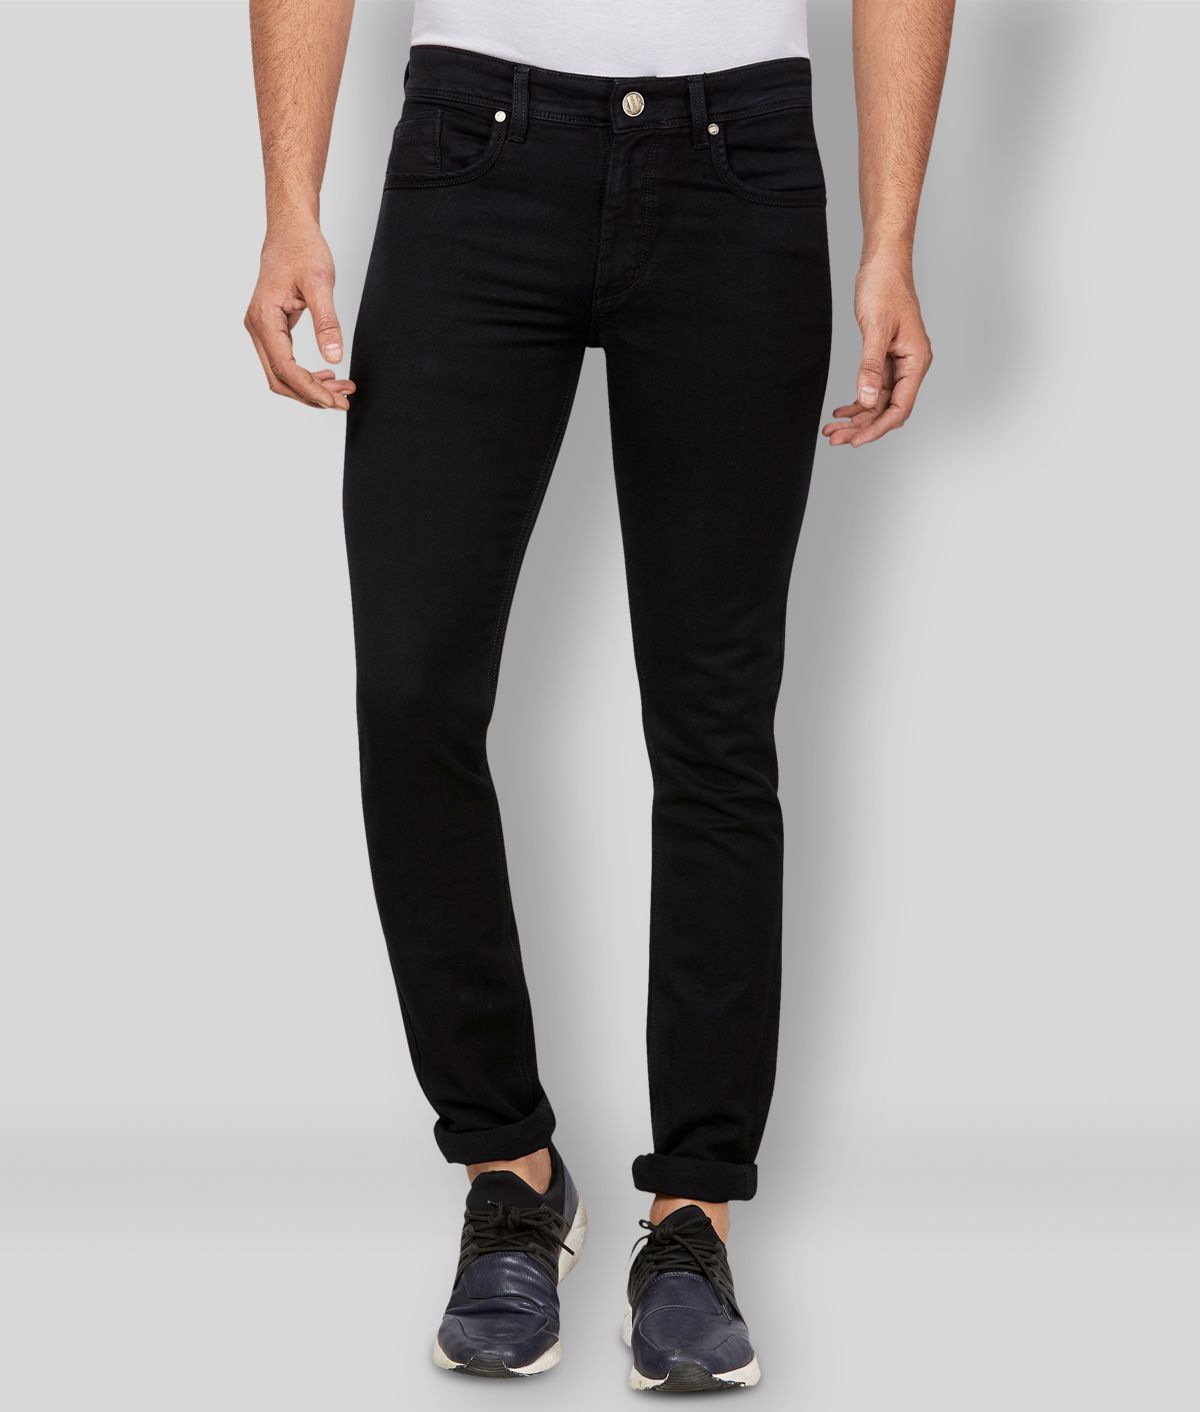     			Hasasi Denim - Black Cotton Blend Regular Fit Men's Jeans ( Pack of 1 )